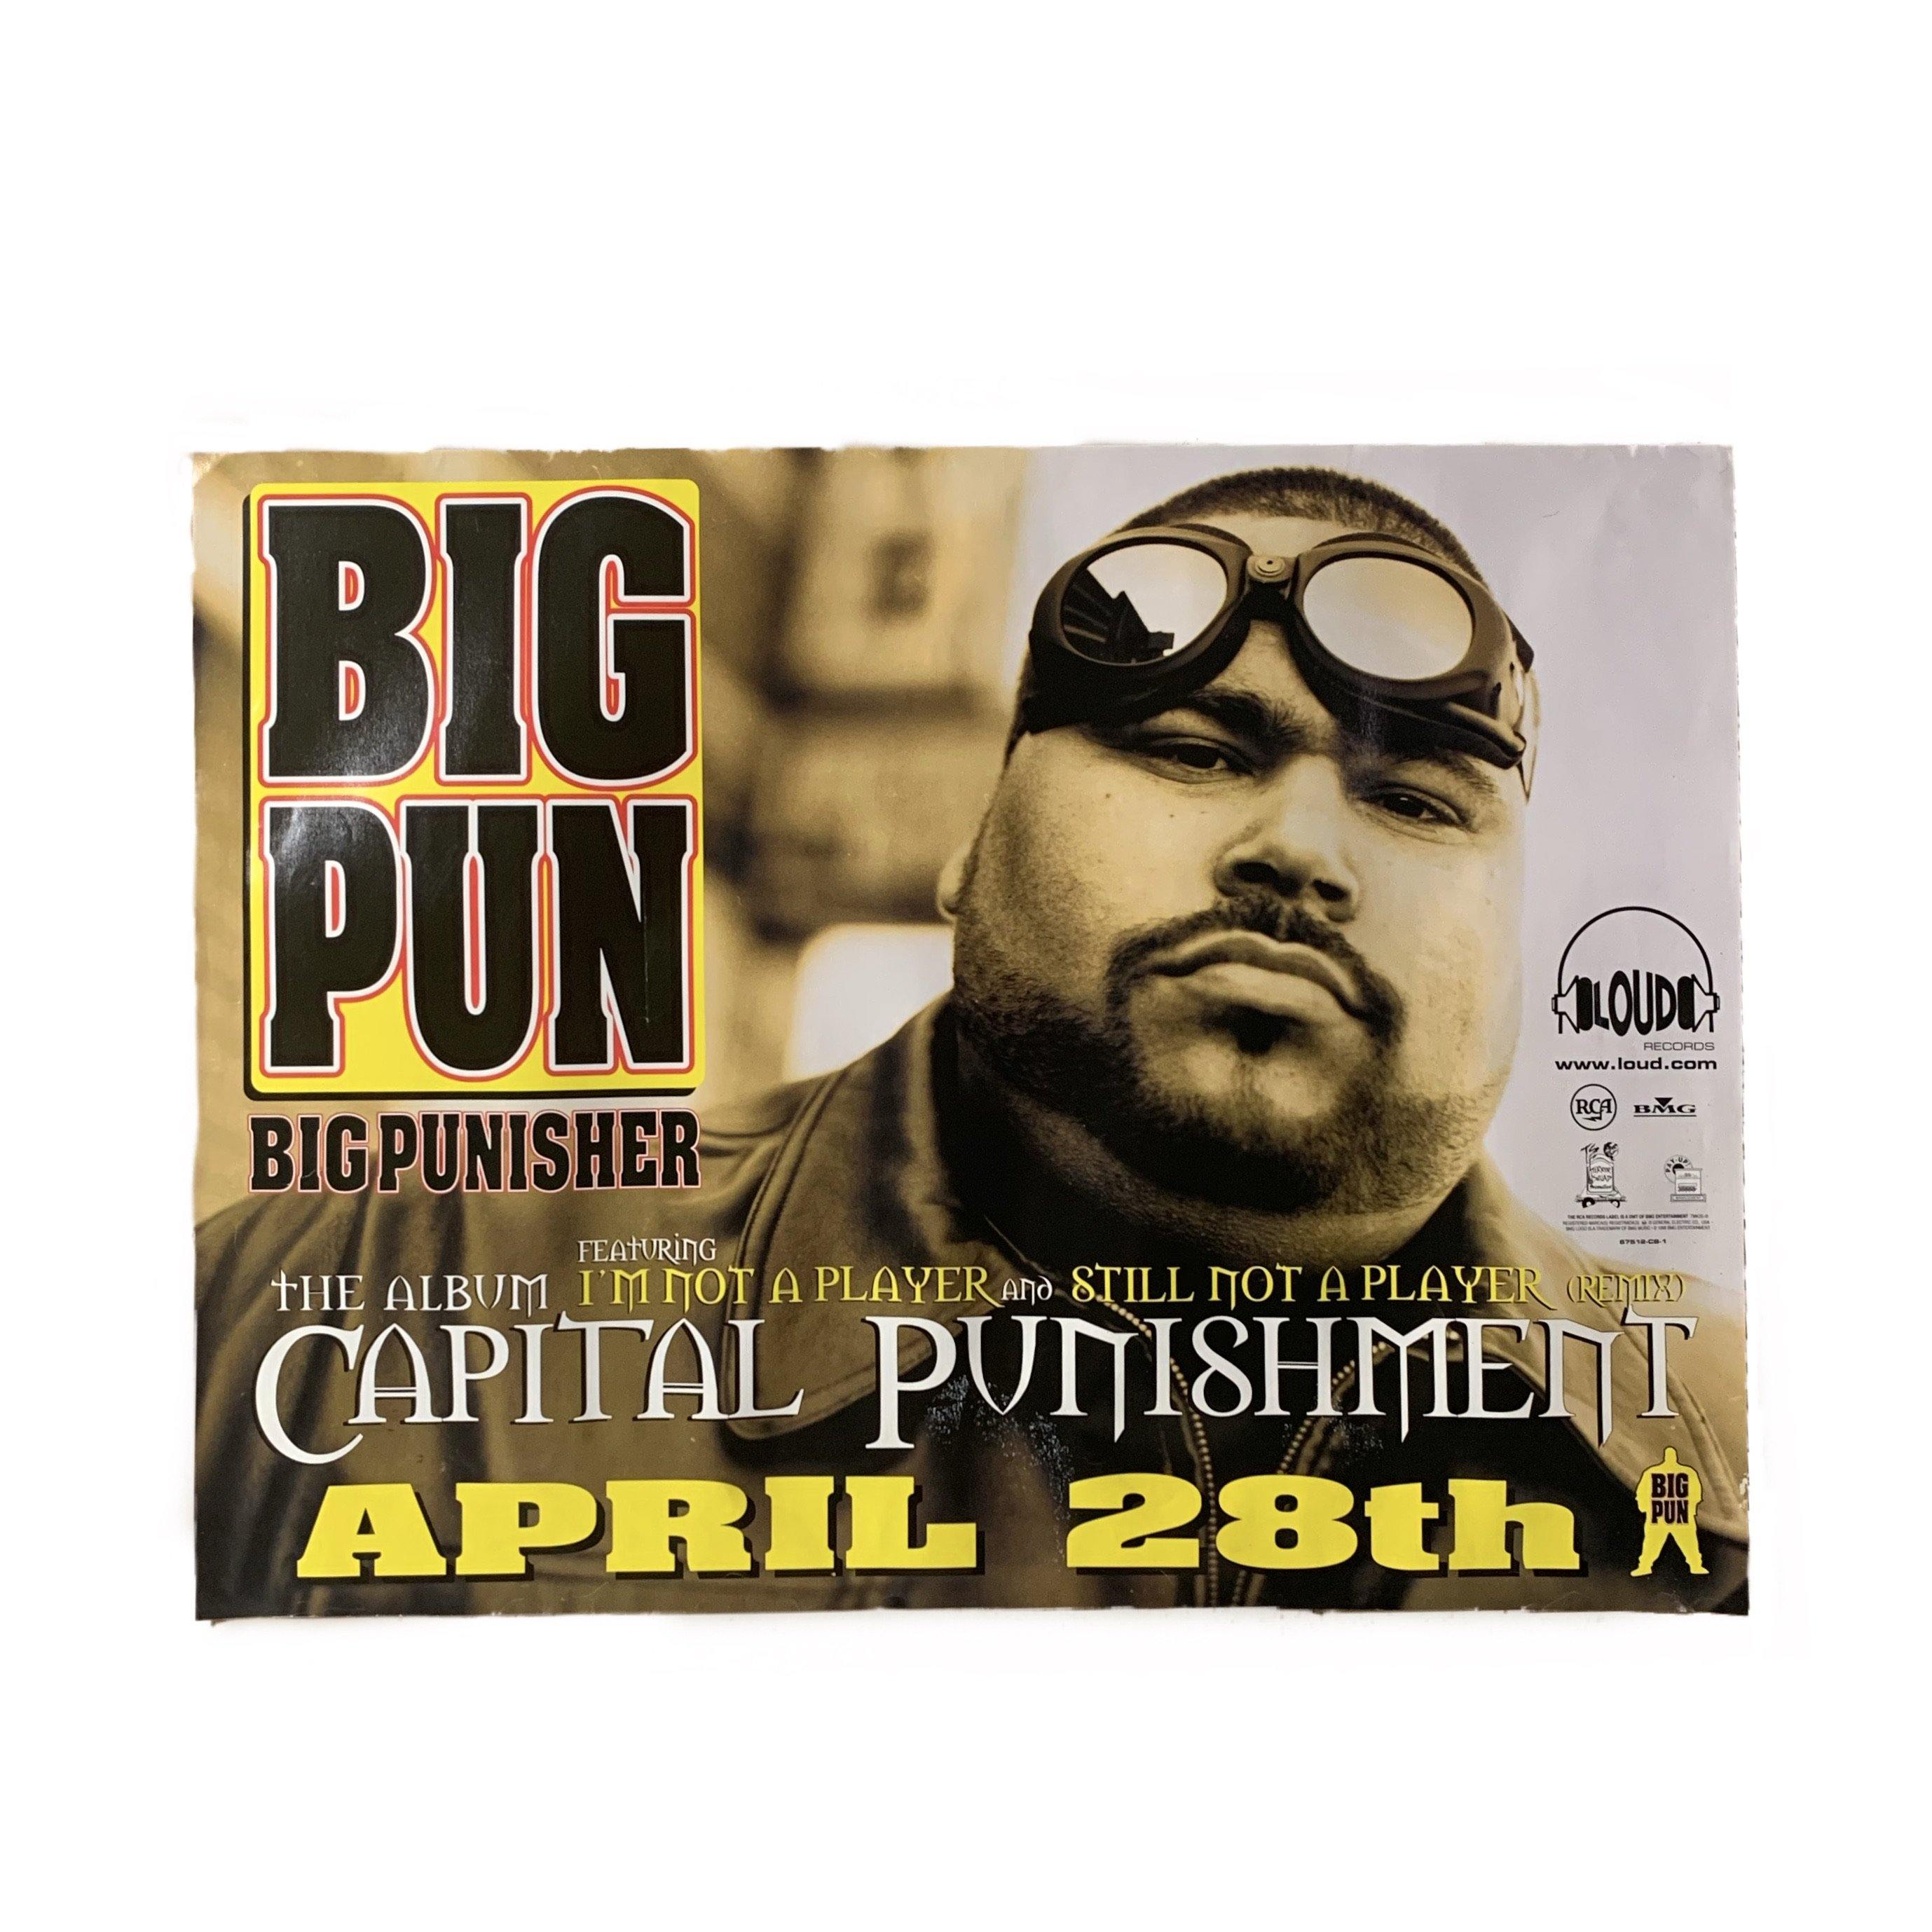 Vintage Big Pun “Capital Punishment” Loud Records Promo Poster